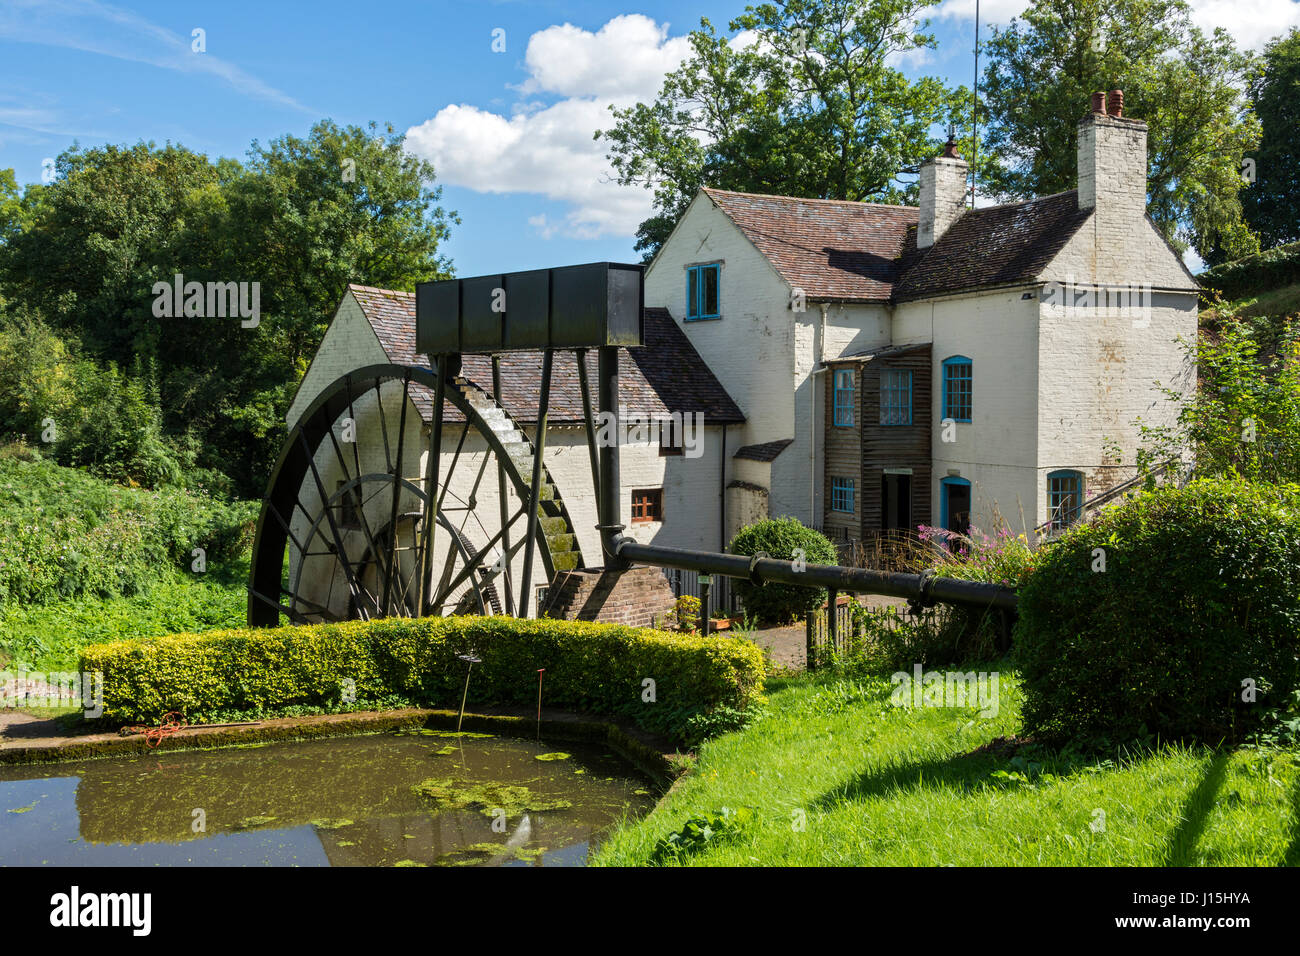 Daniel's Mill at Eardington, near Bridgnorth, Shropshire, England, UK. Stock Photo